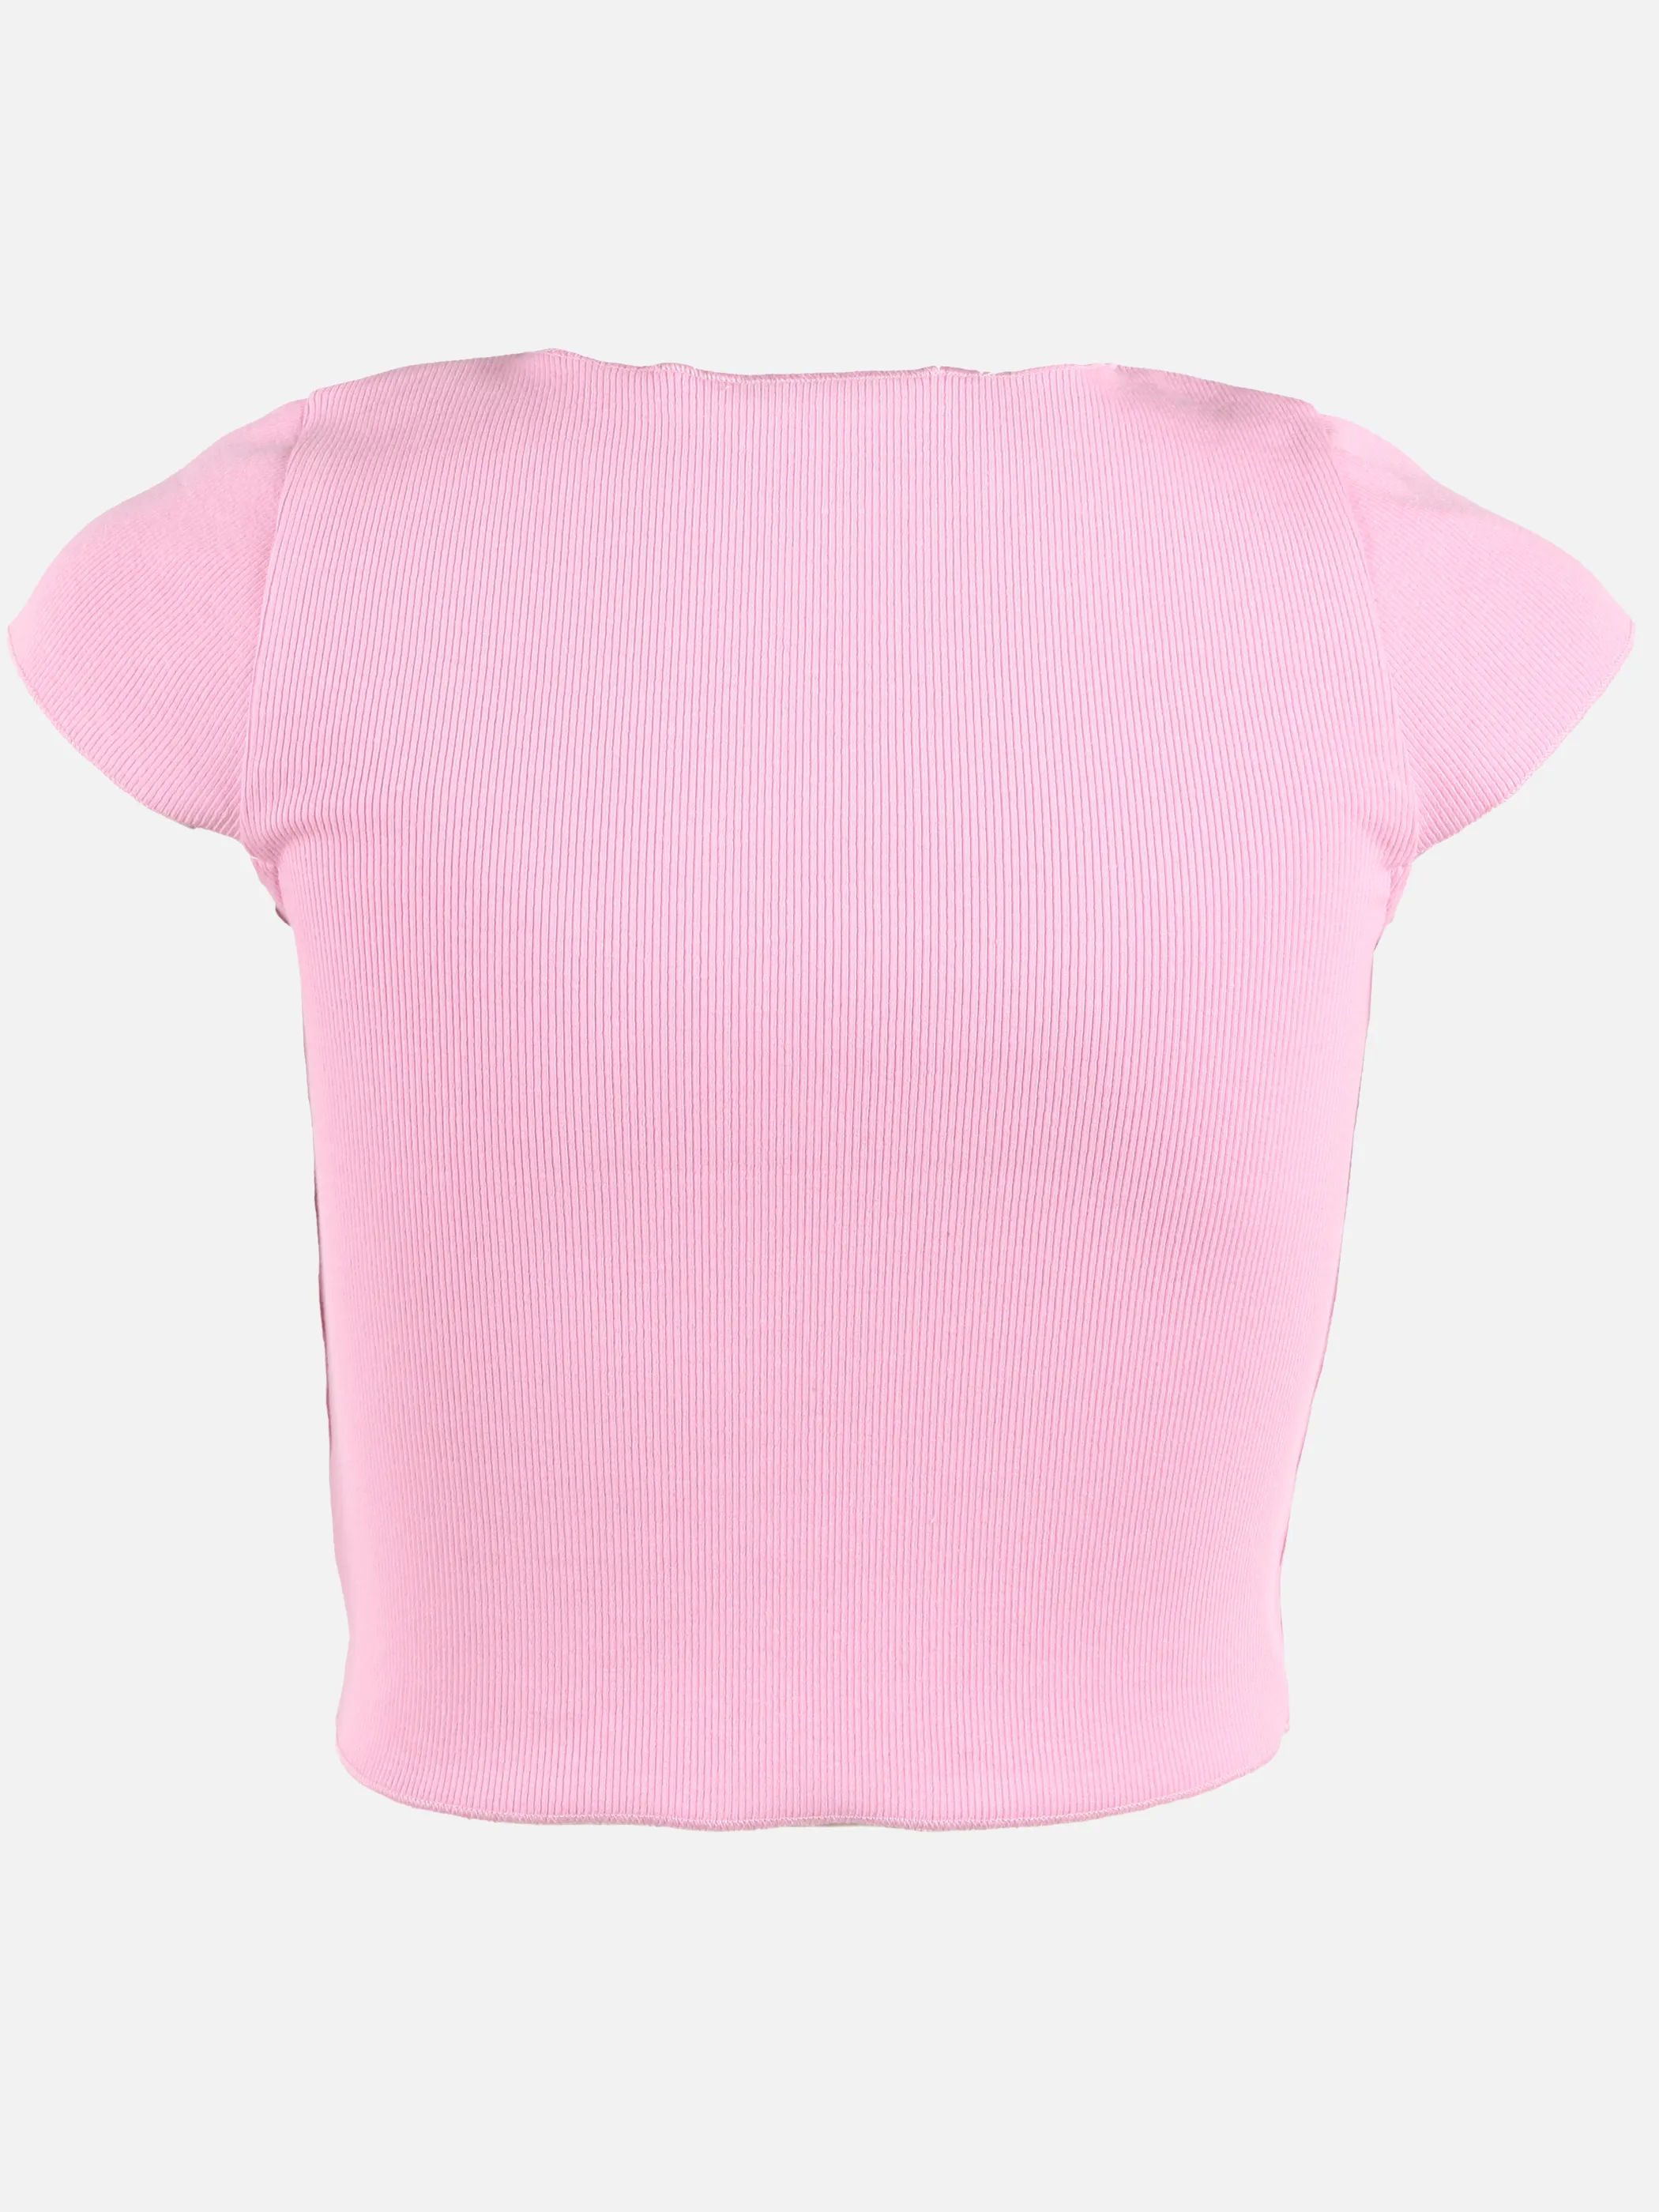 Stop + Go JM geripptes rundhals T-Shirt Pink 890971 PINK 2